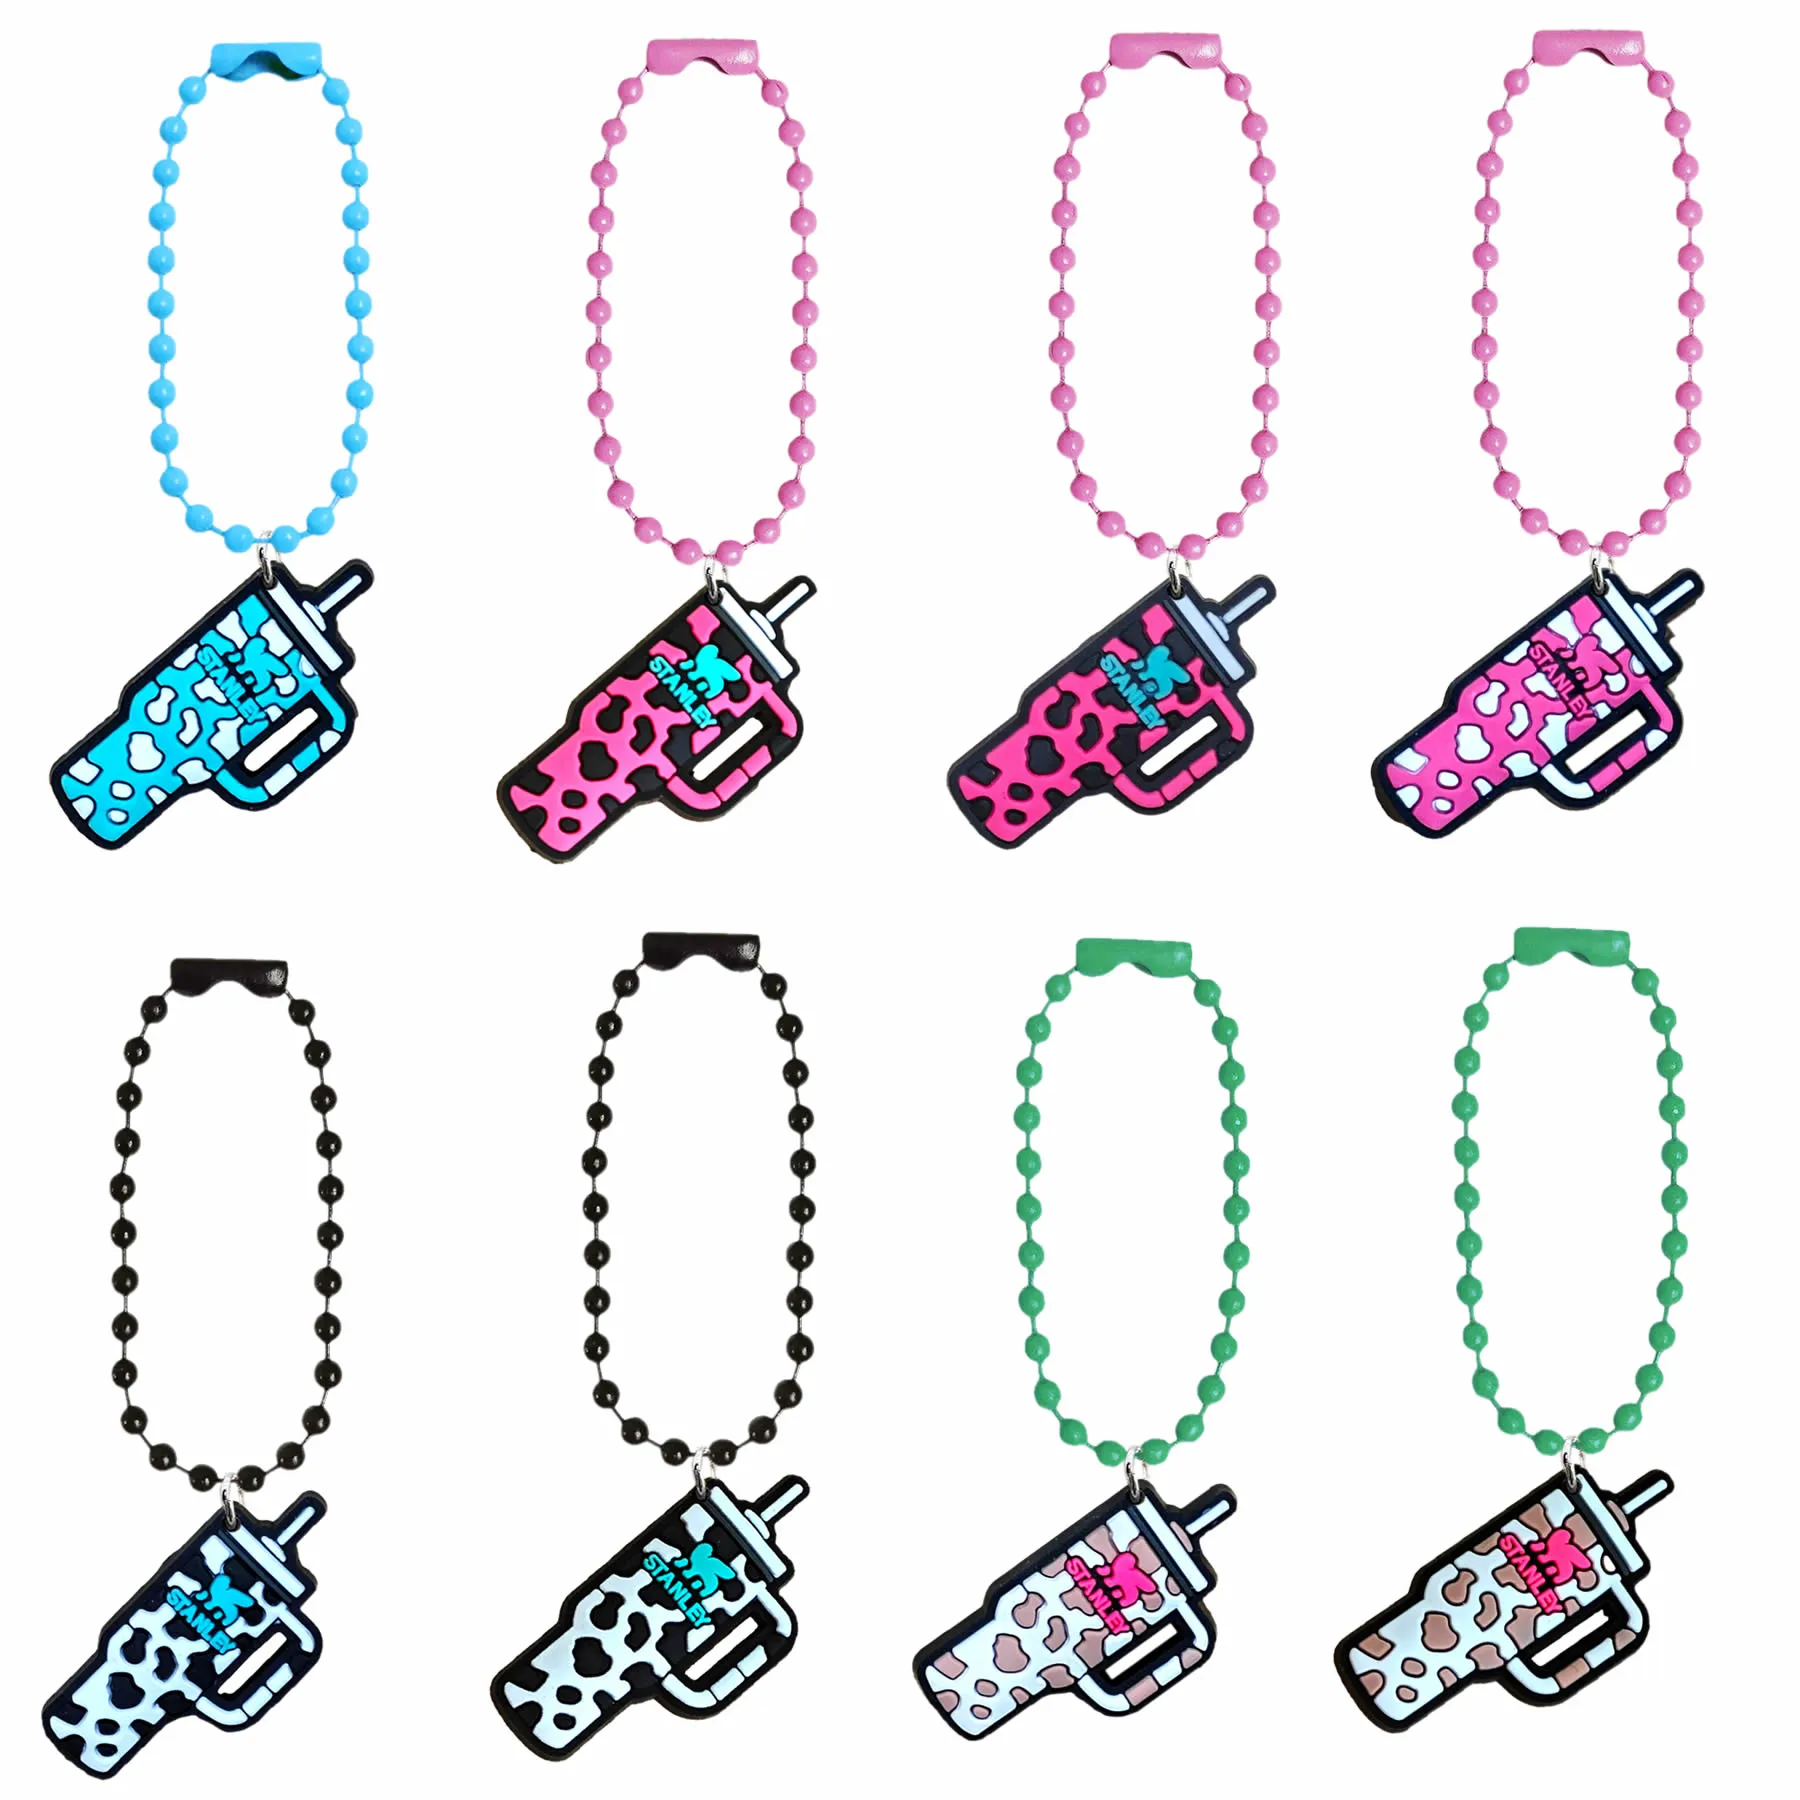 straw cover caps series keychain bead keychains cartoon fashion keyrings charms car key ring for women girls bag